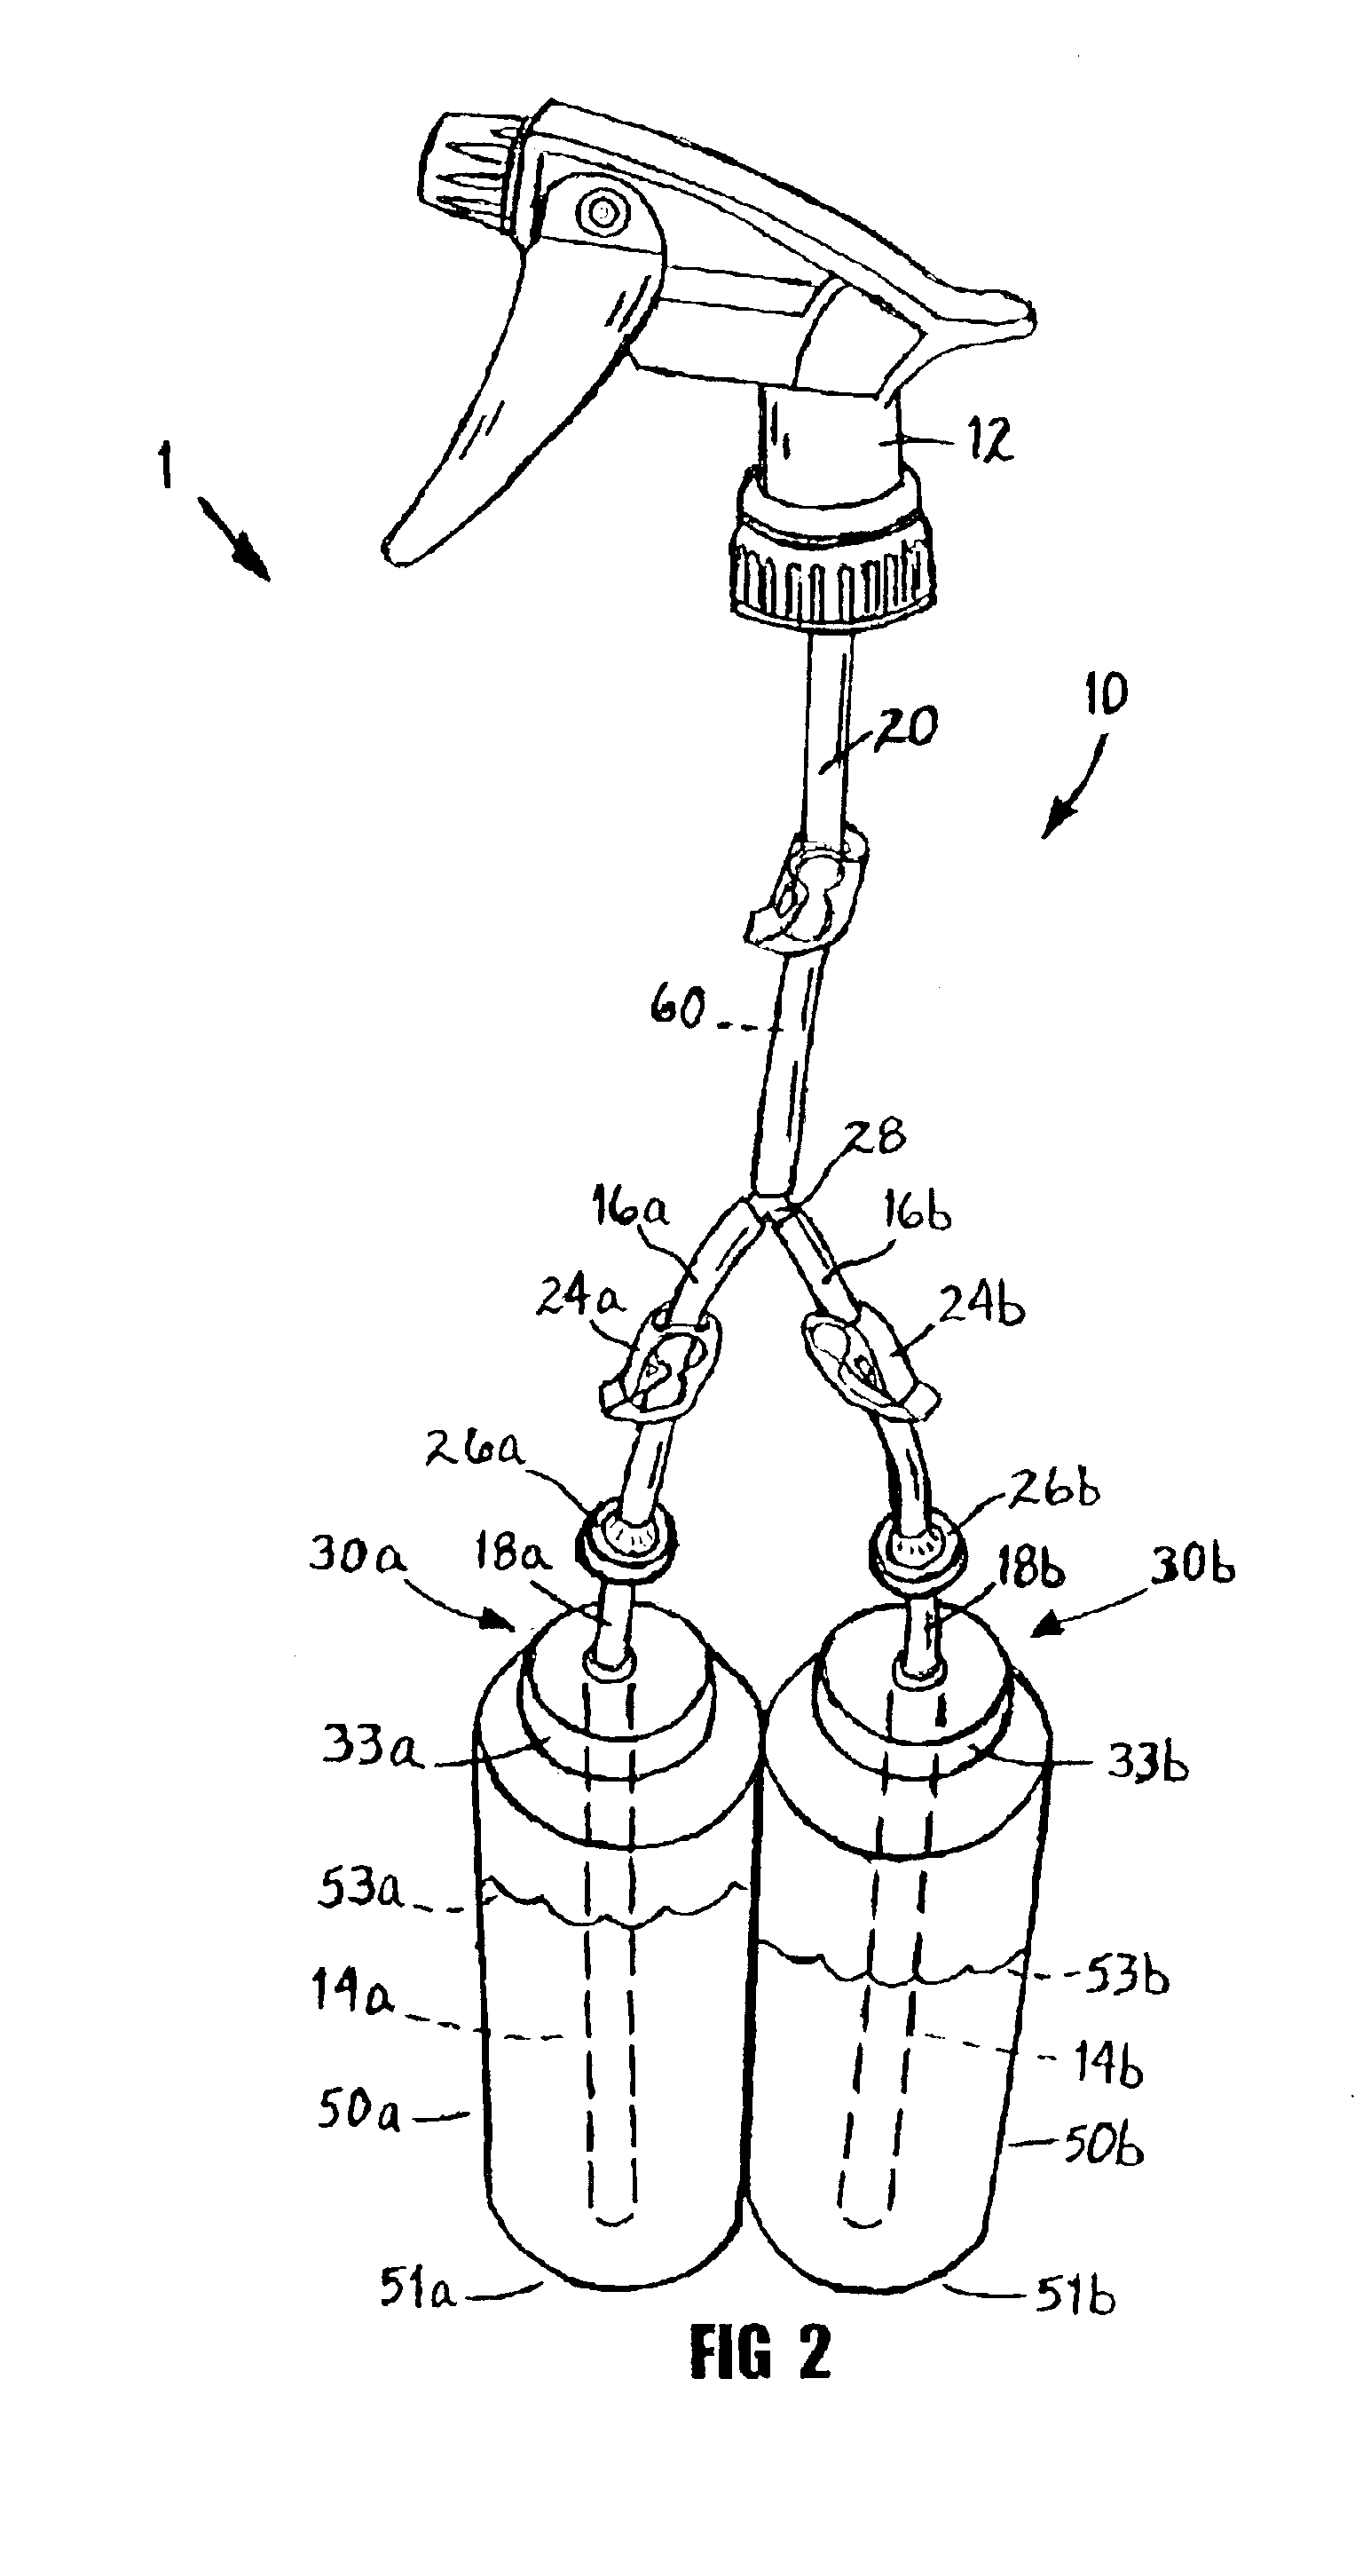 Multiple fluid closed system dispensing device